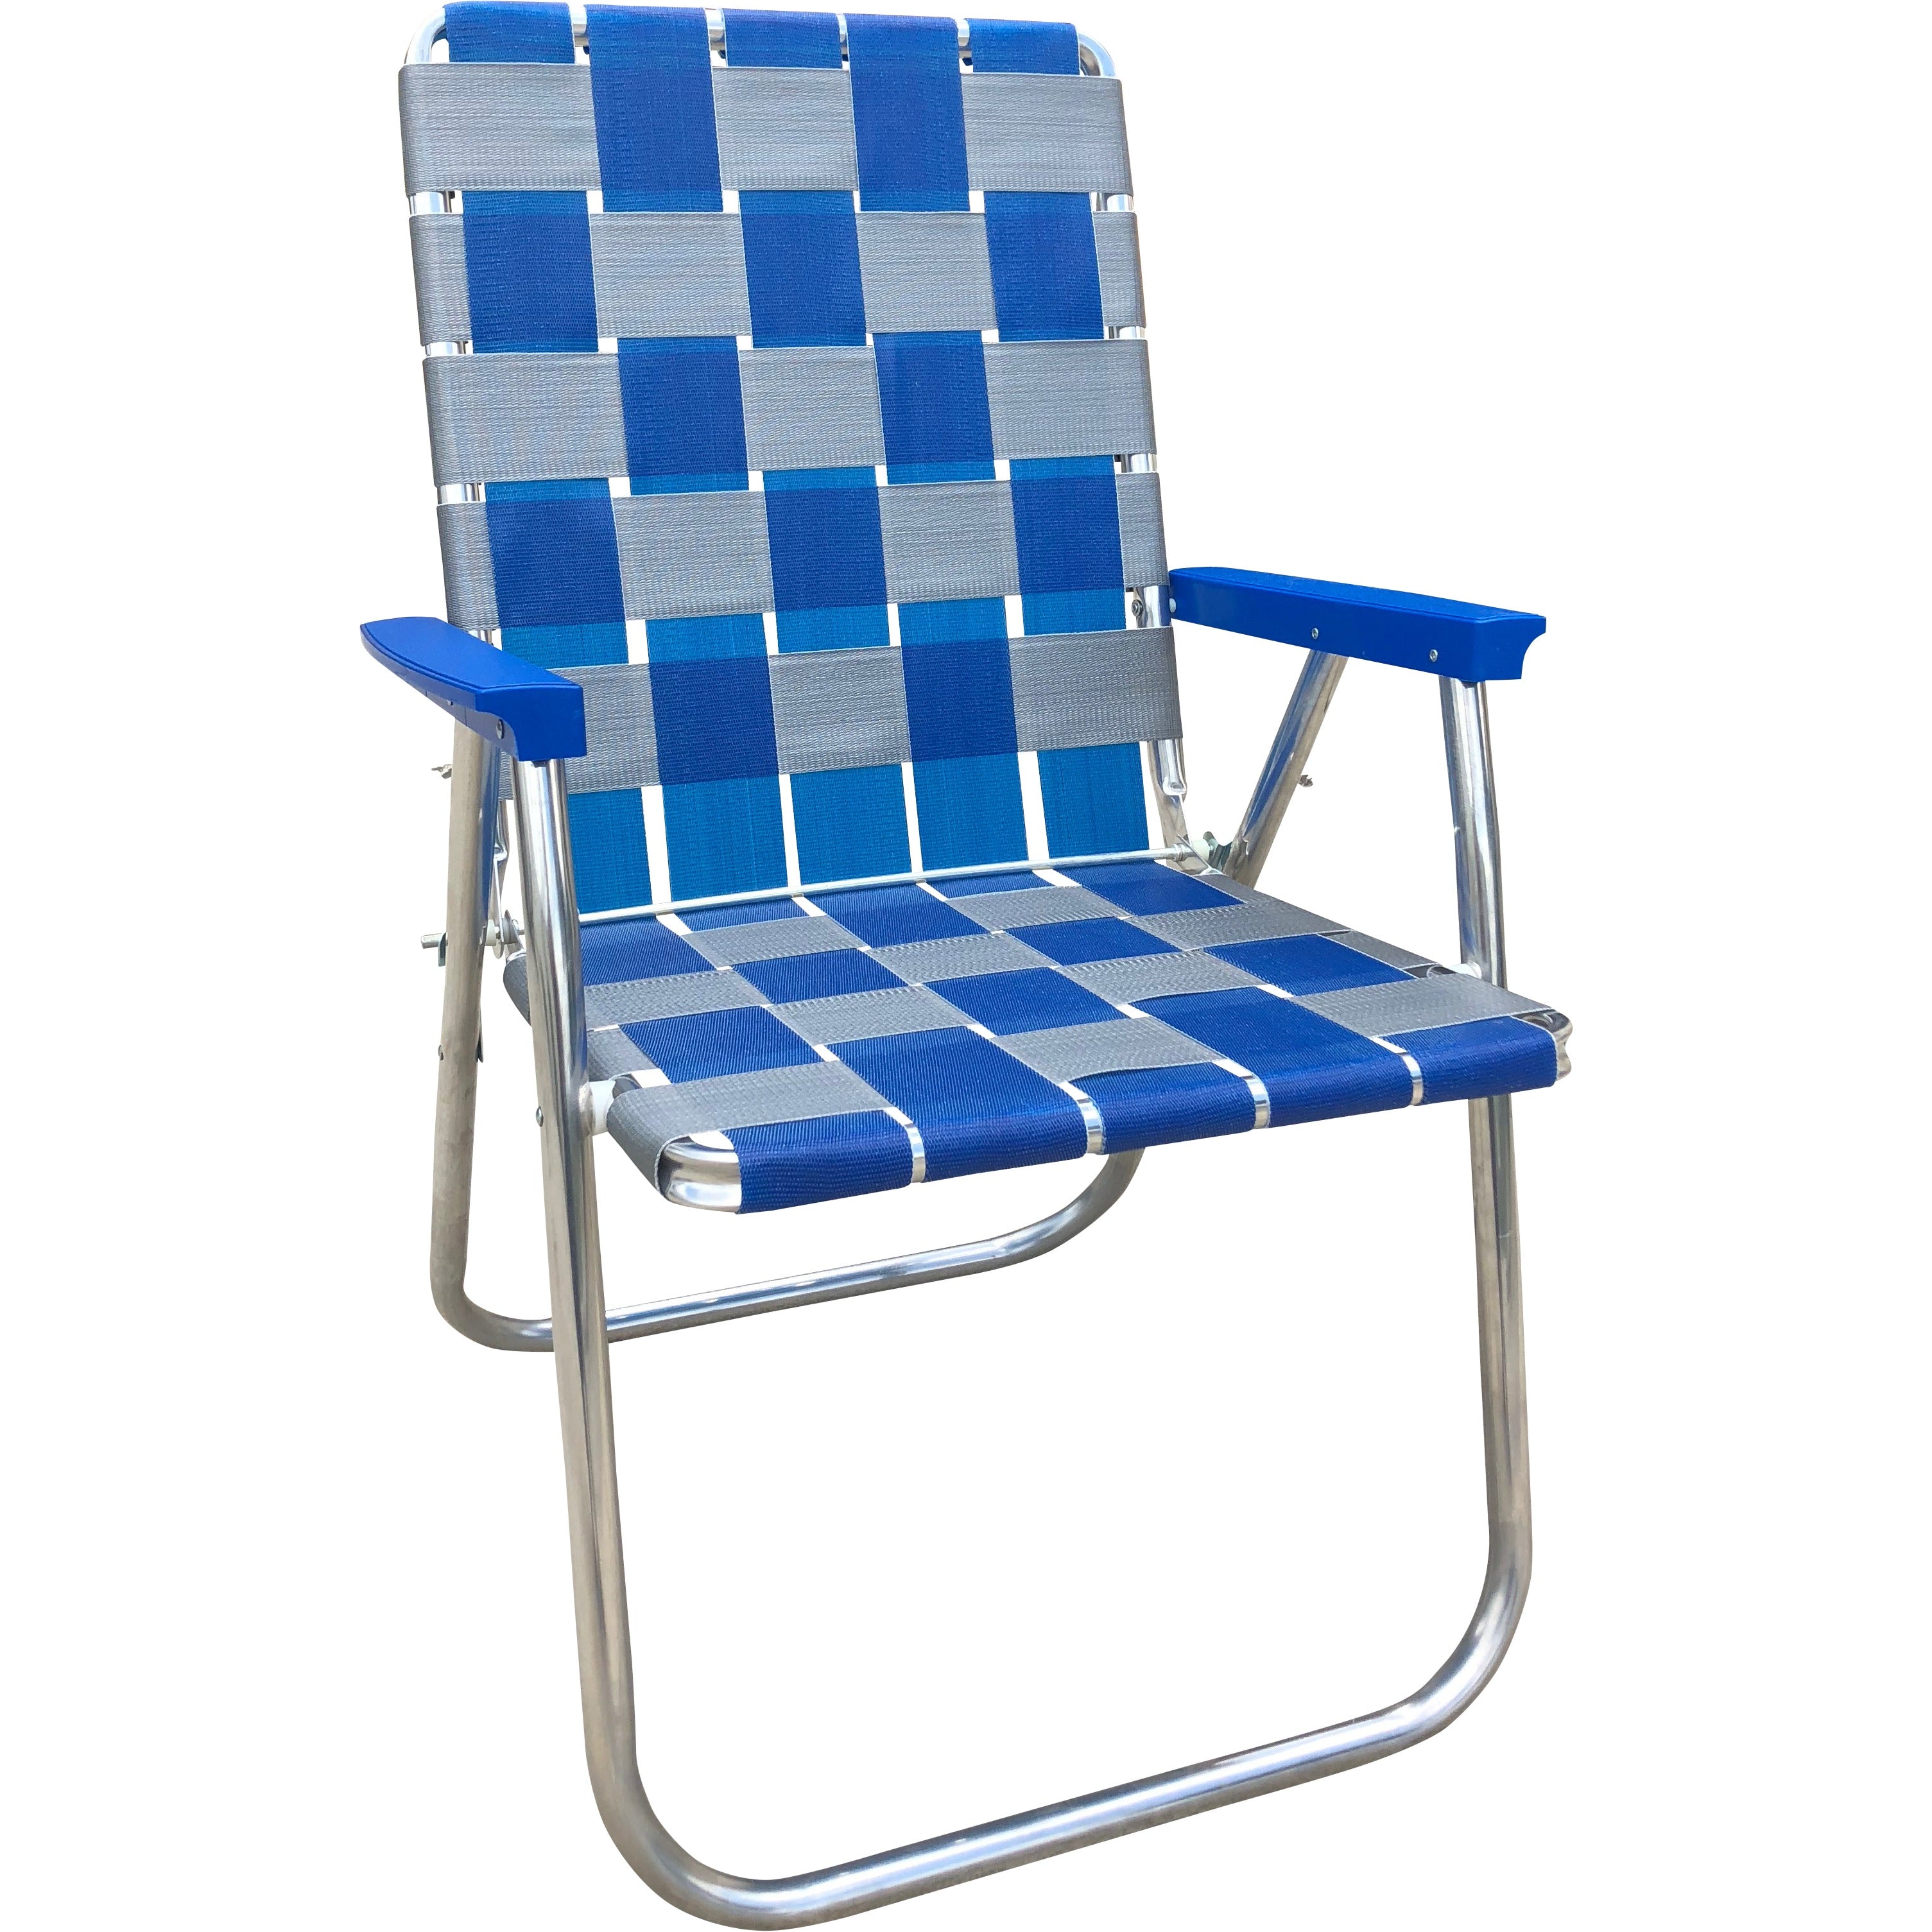 Lawn Chair USA Blue & Silver Classic Vintage